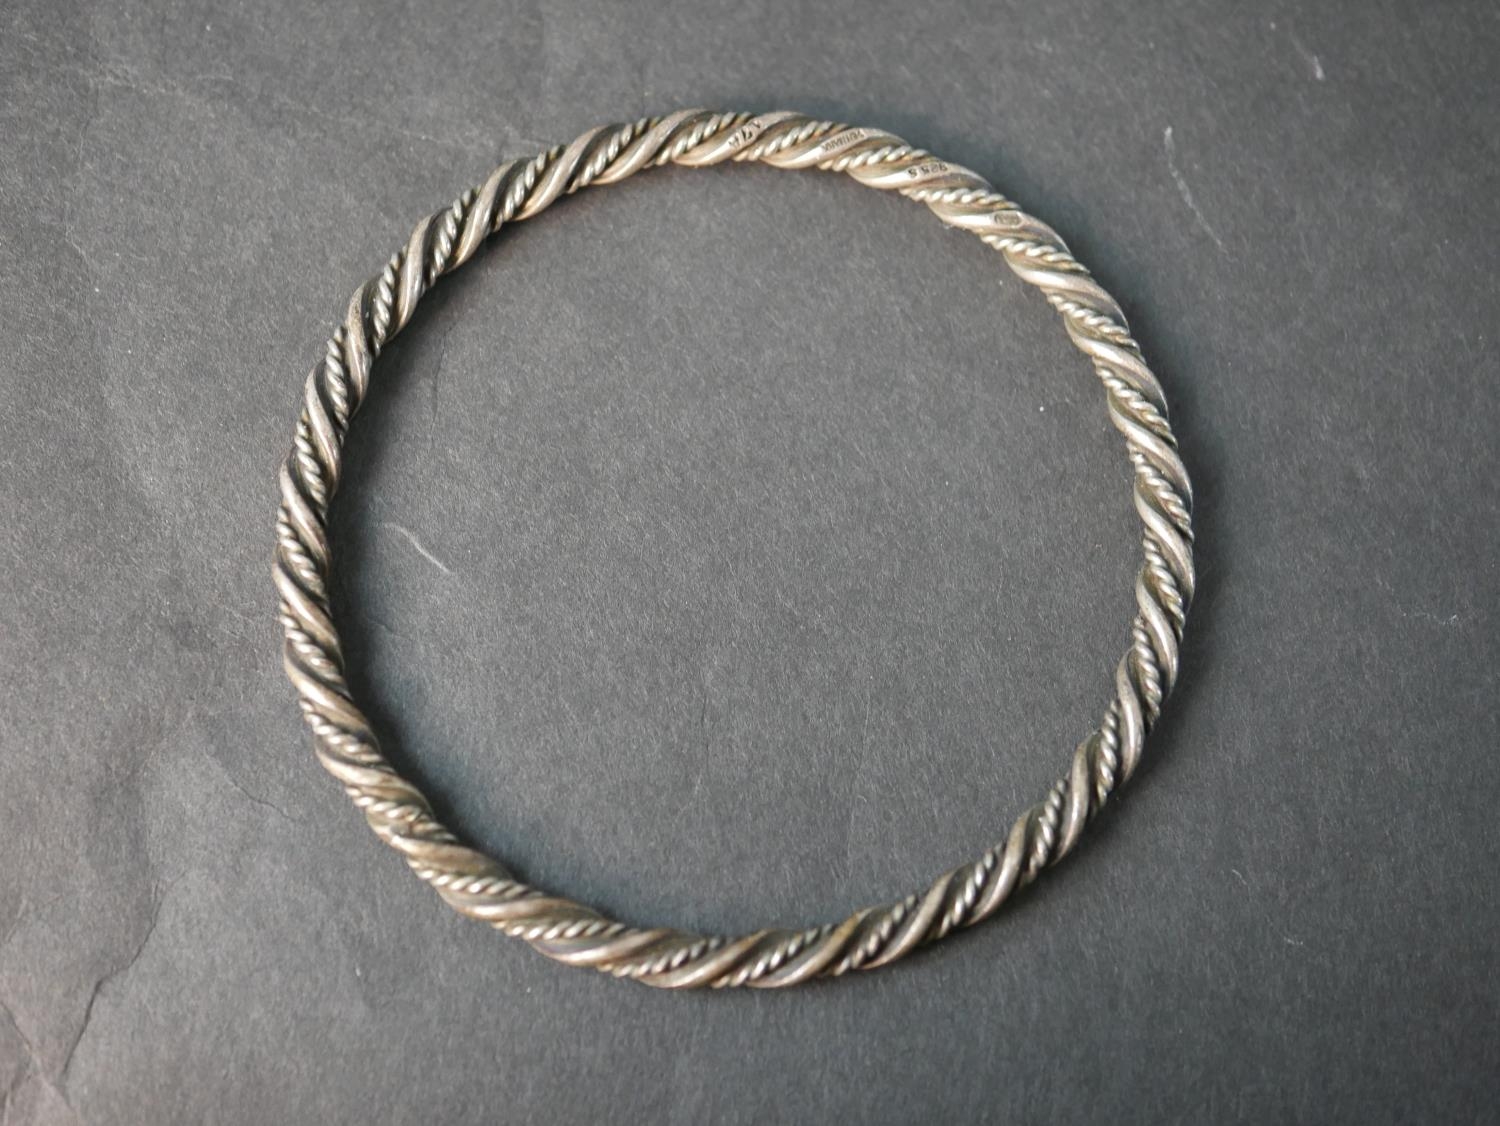 A Georg Jensen silver rope twist bangle, design no. 17B, George Jensen oval mark.